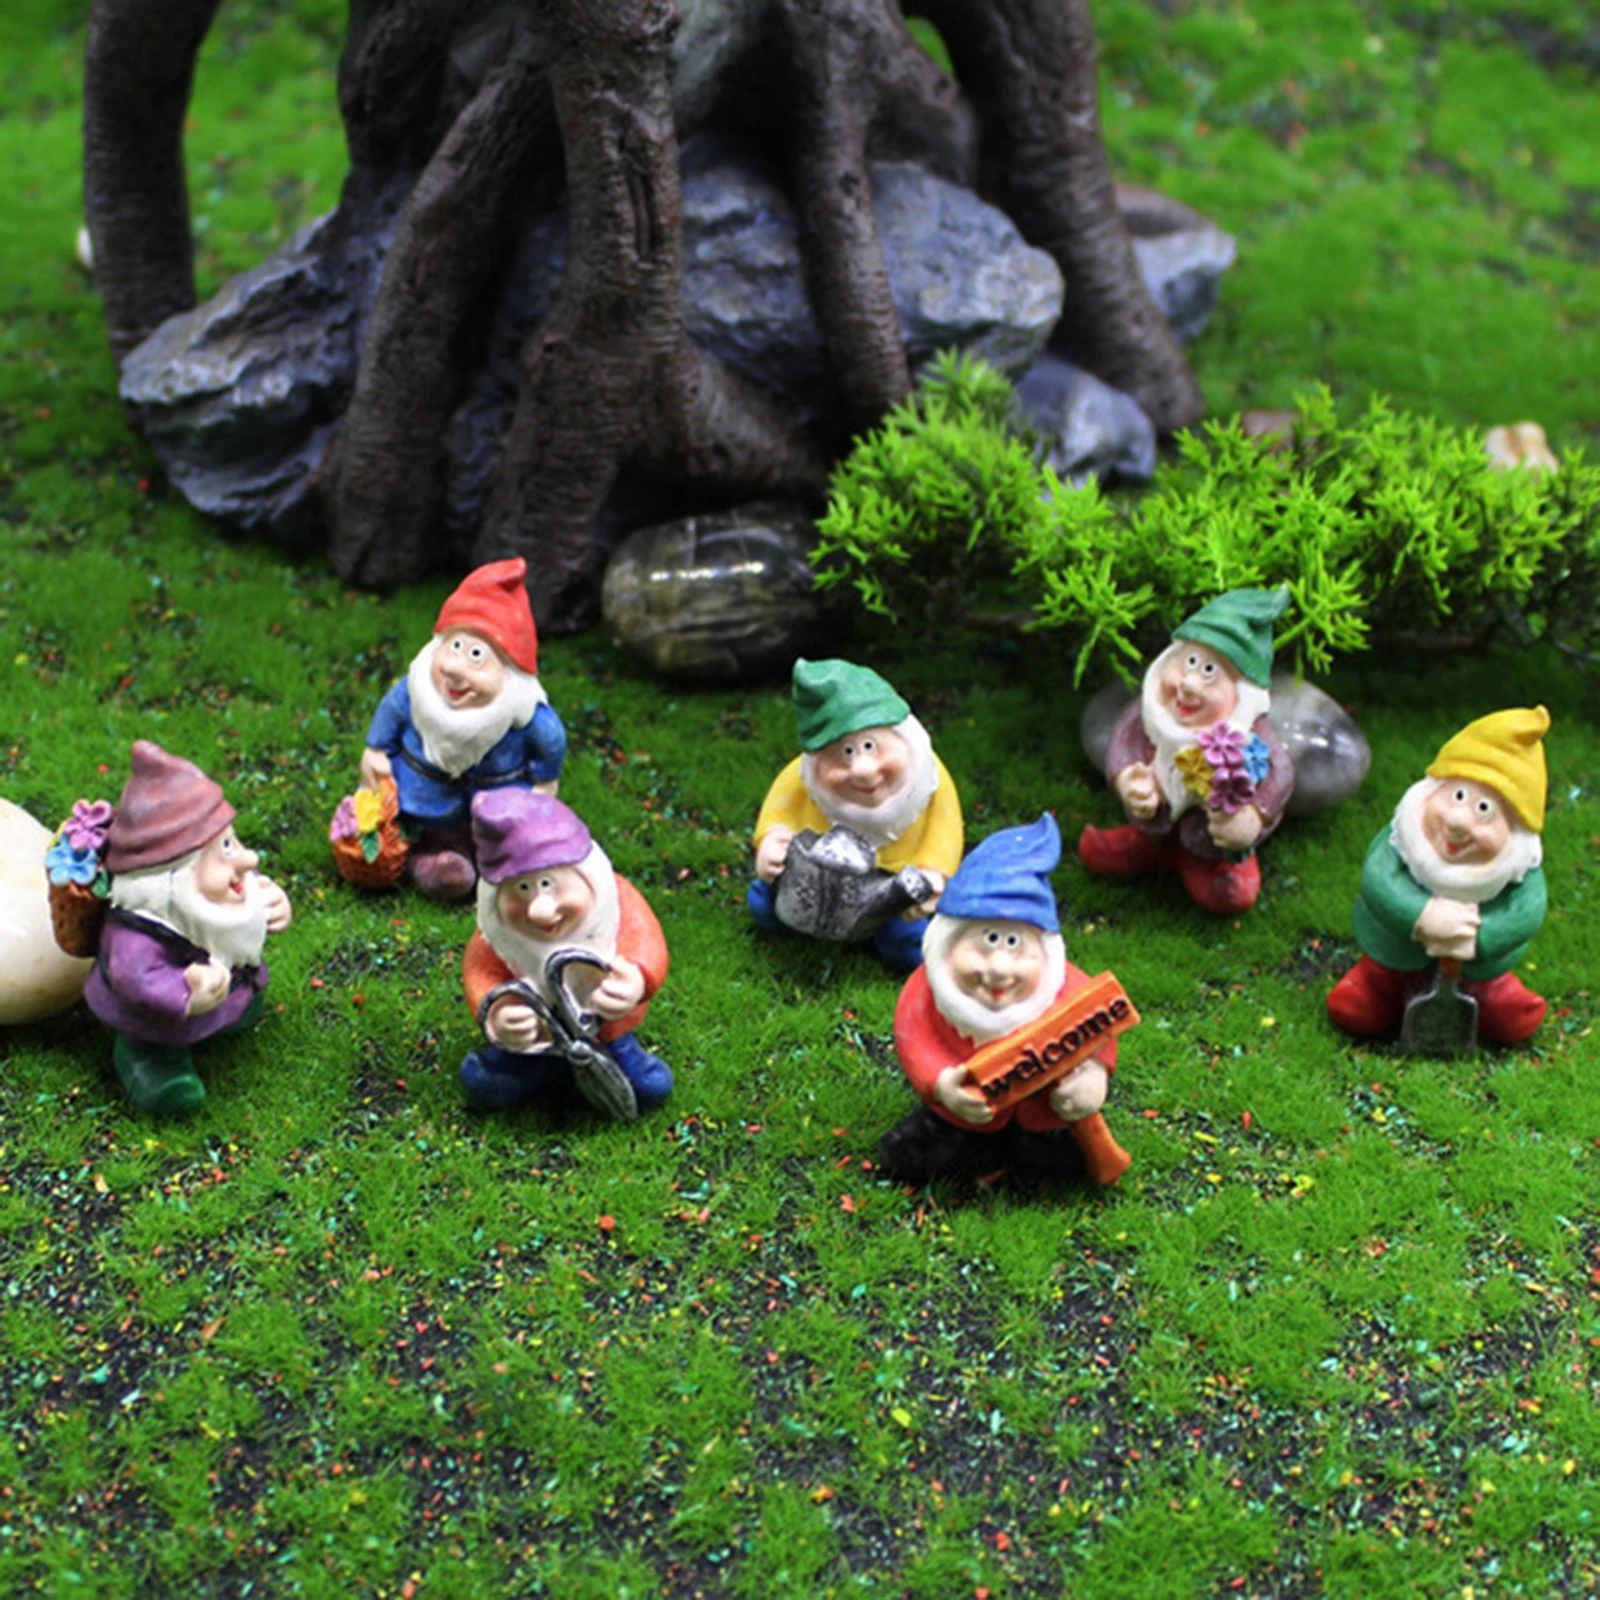 7Pack of Gnomes Garden Statue Decorations Micro Landscape Miniature Ornament